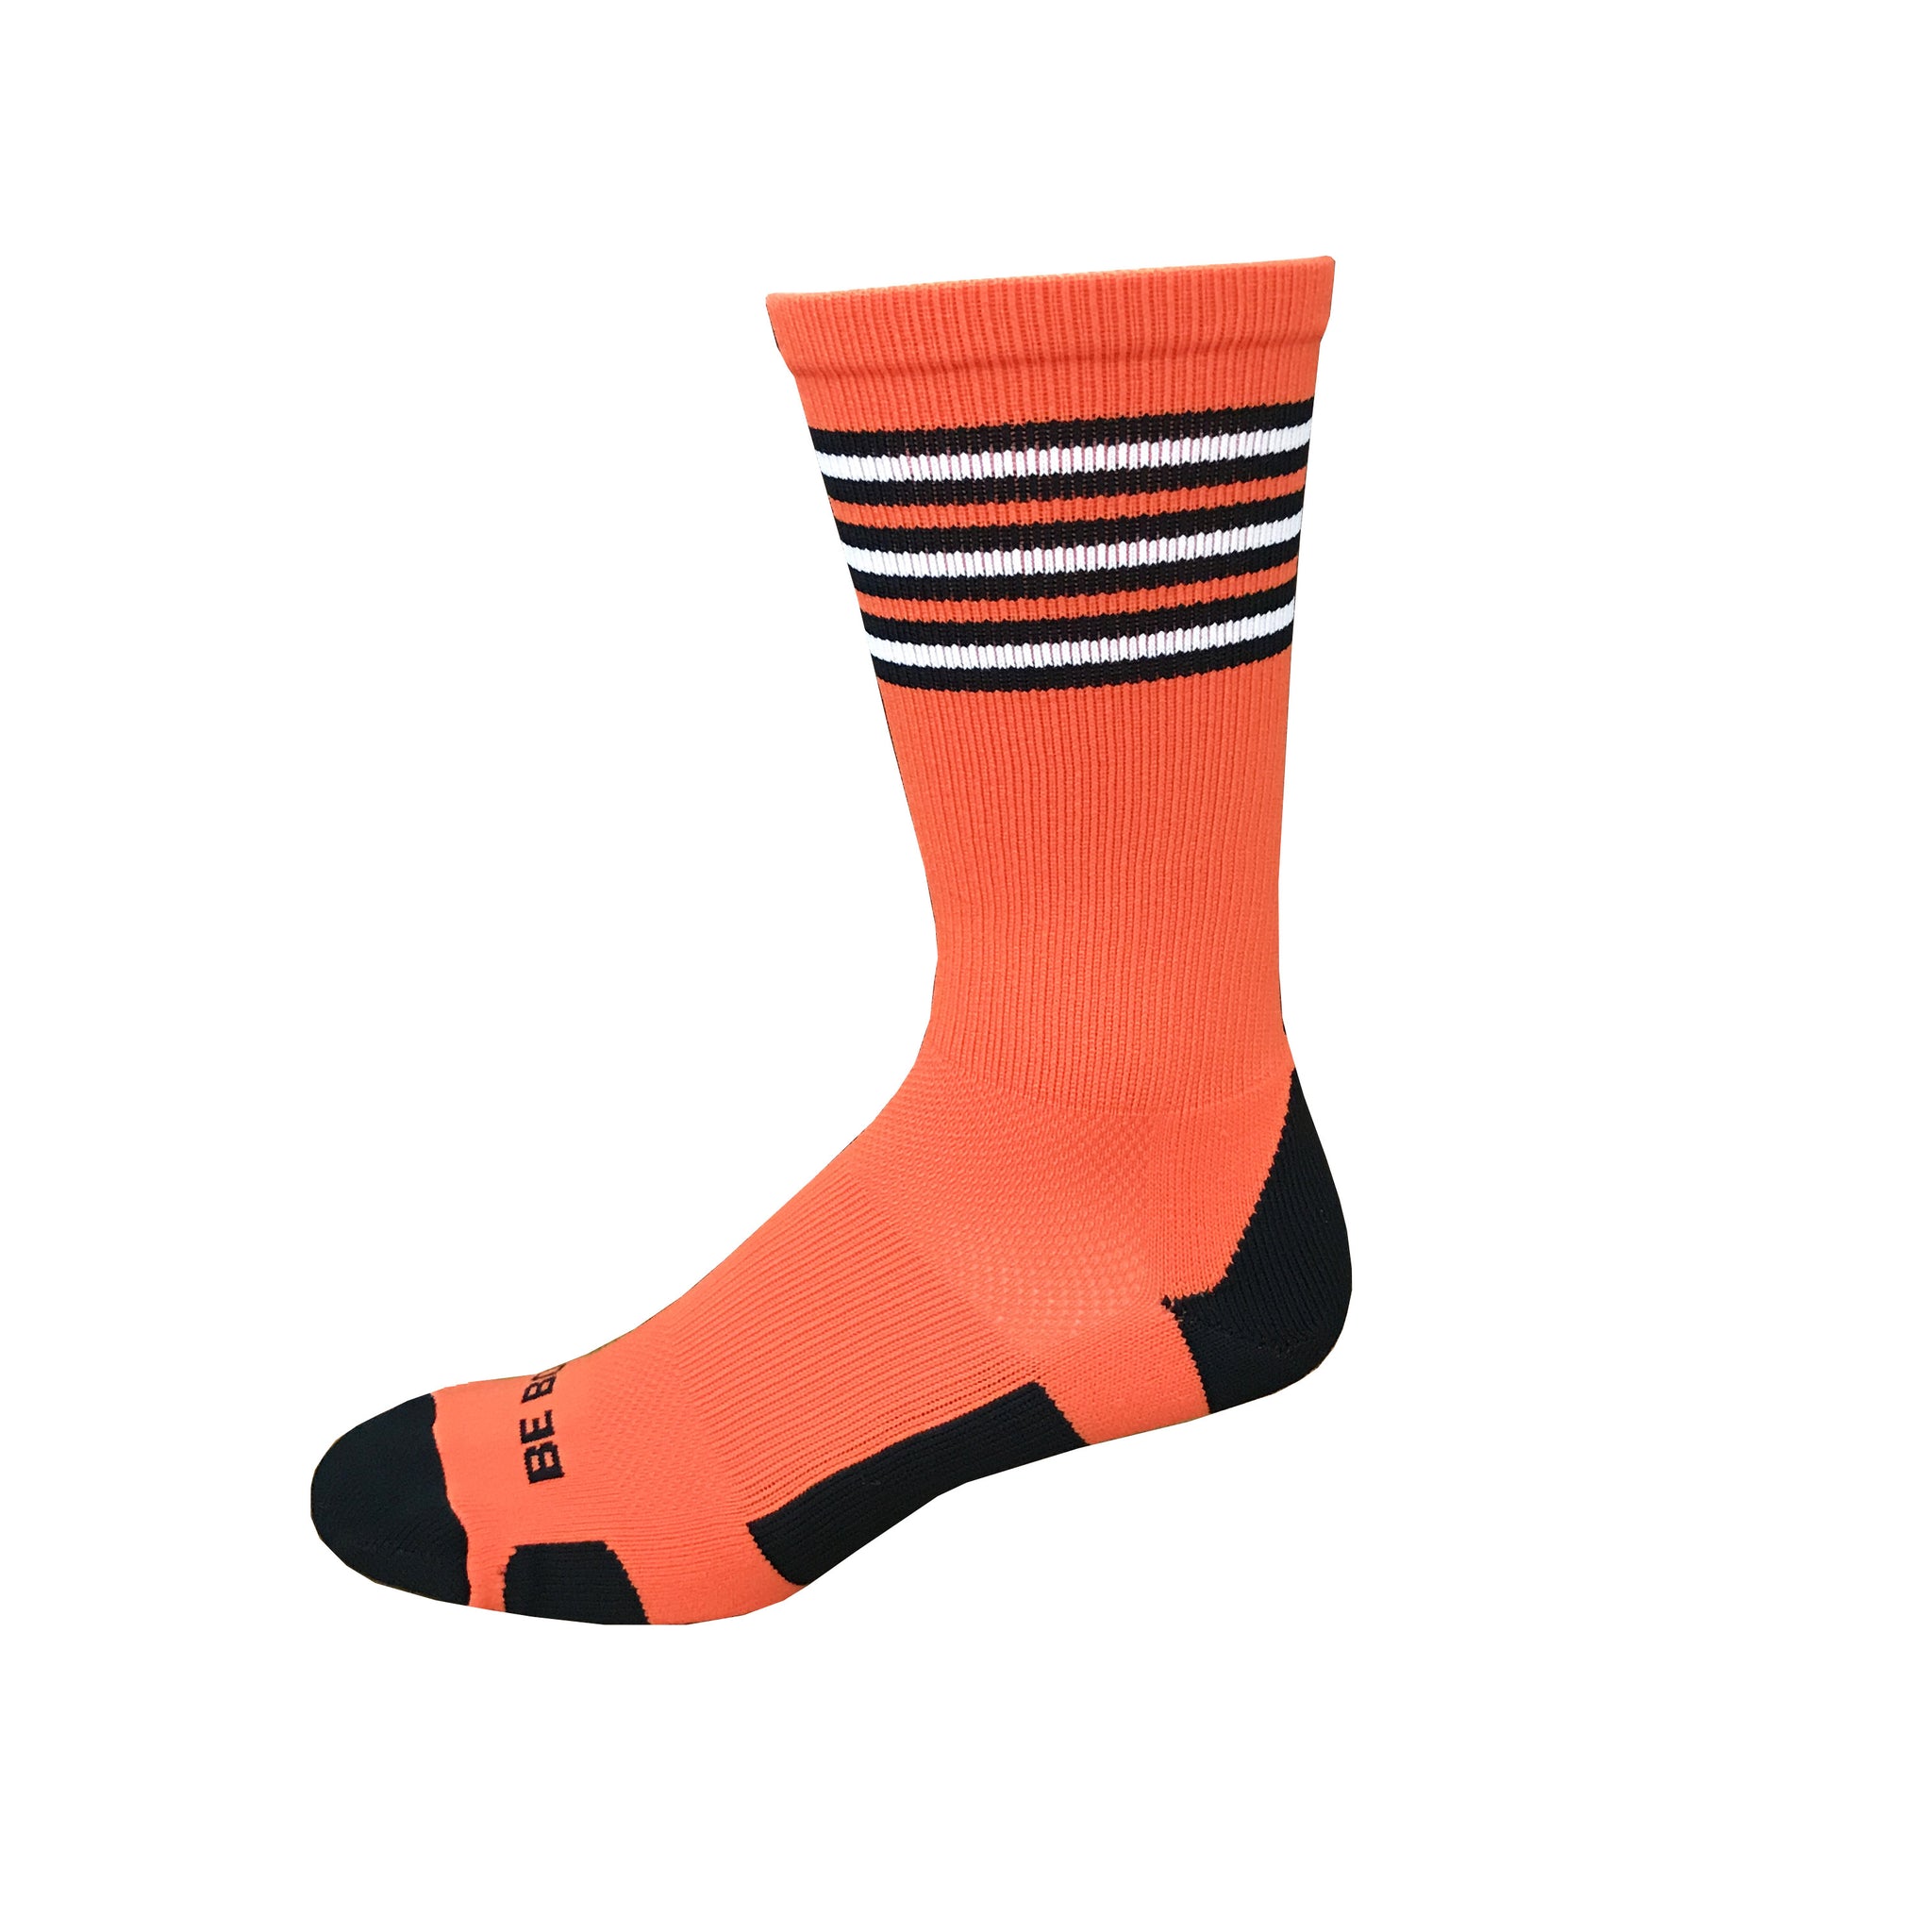 orange athletic socks